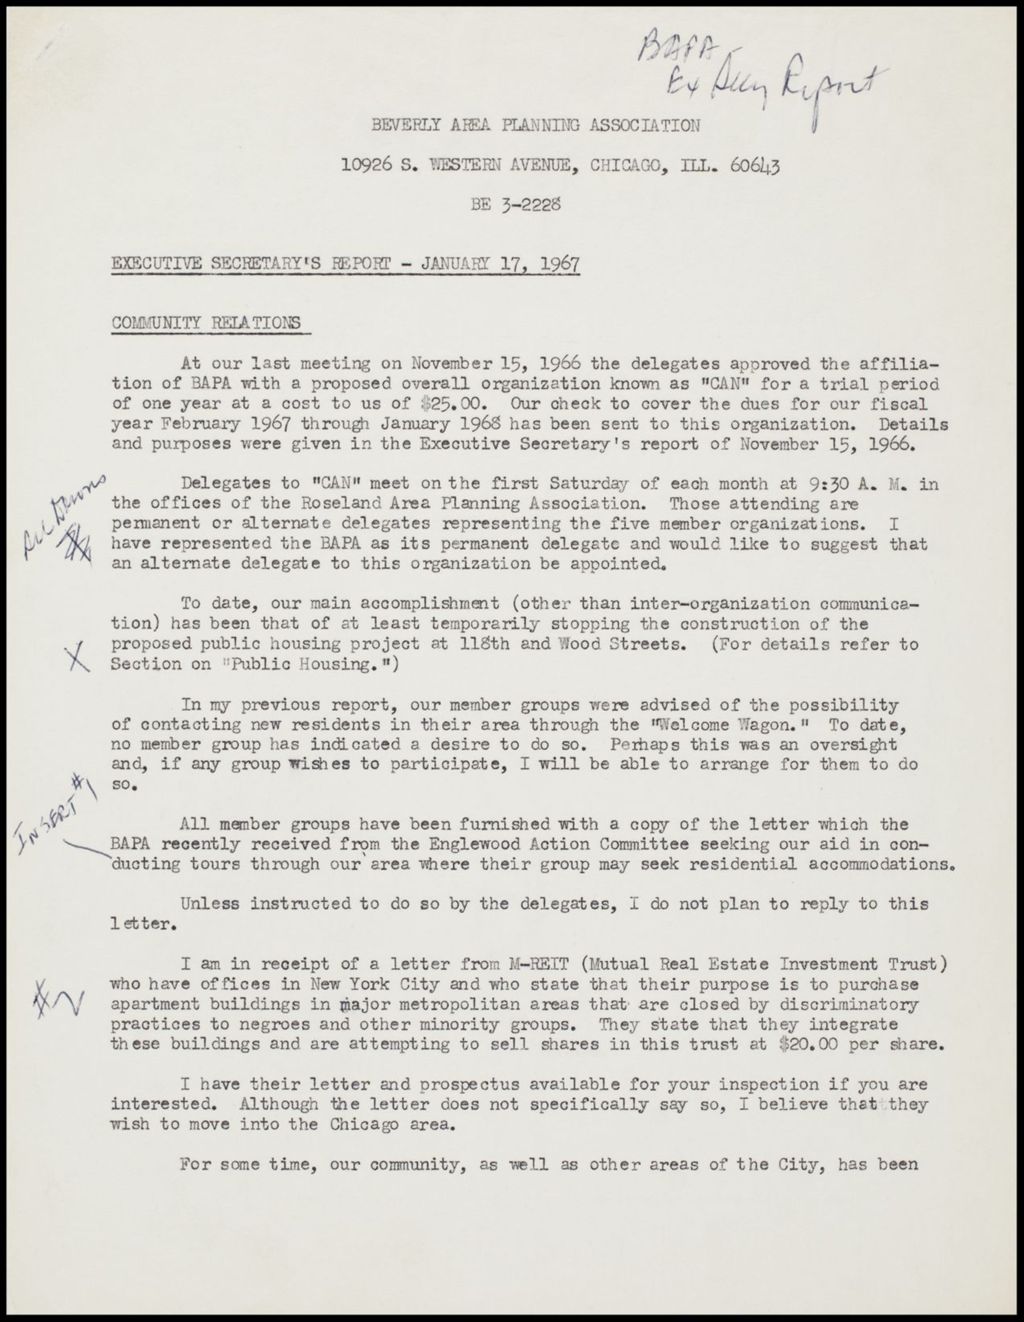 Miniature of Executive Secretary's reports, 1967 (Folder 102)